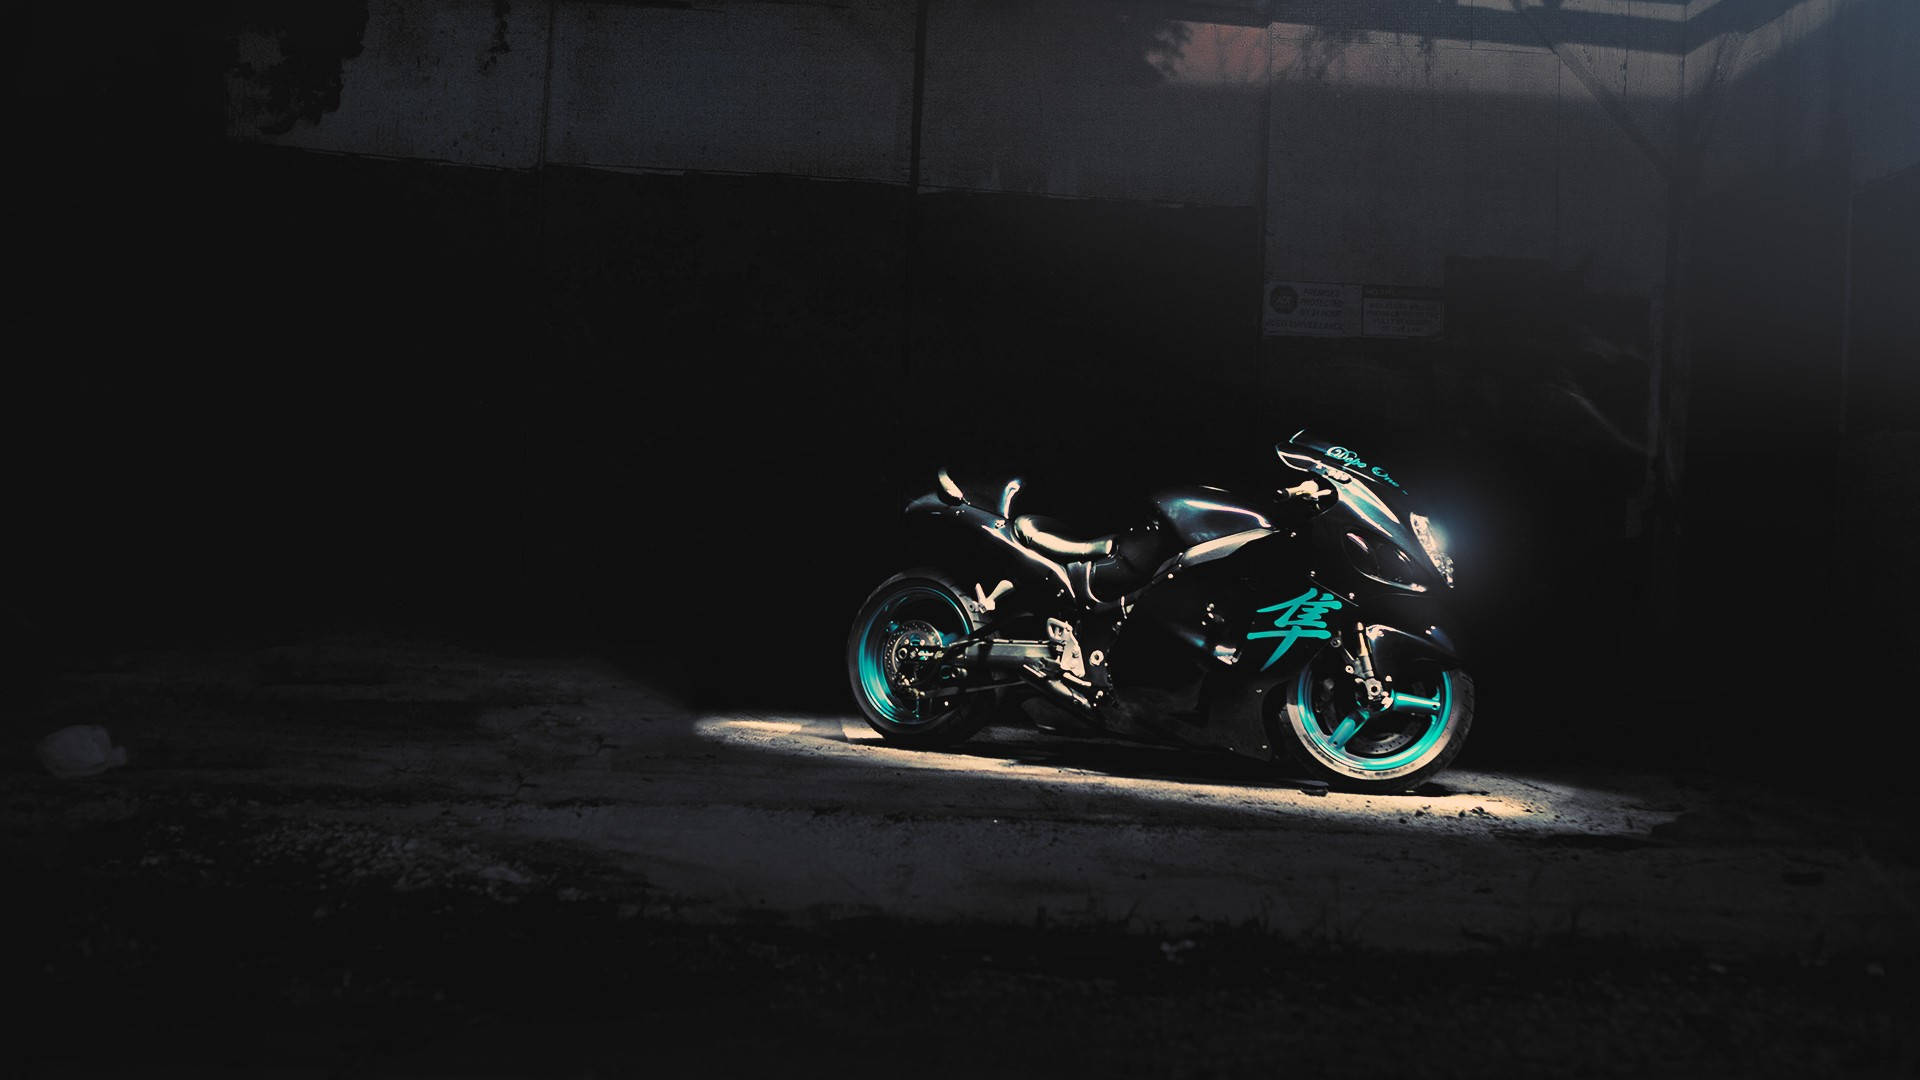 Cool Racing Hayabusa Bike In The Dark Wallpaper